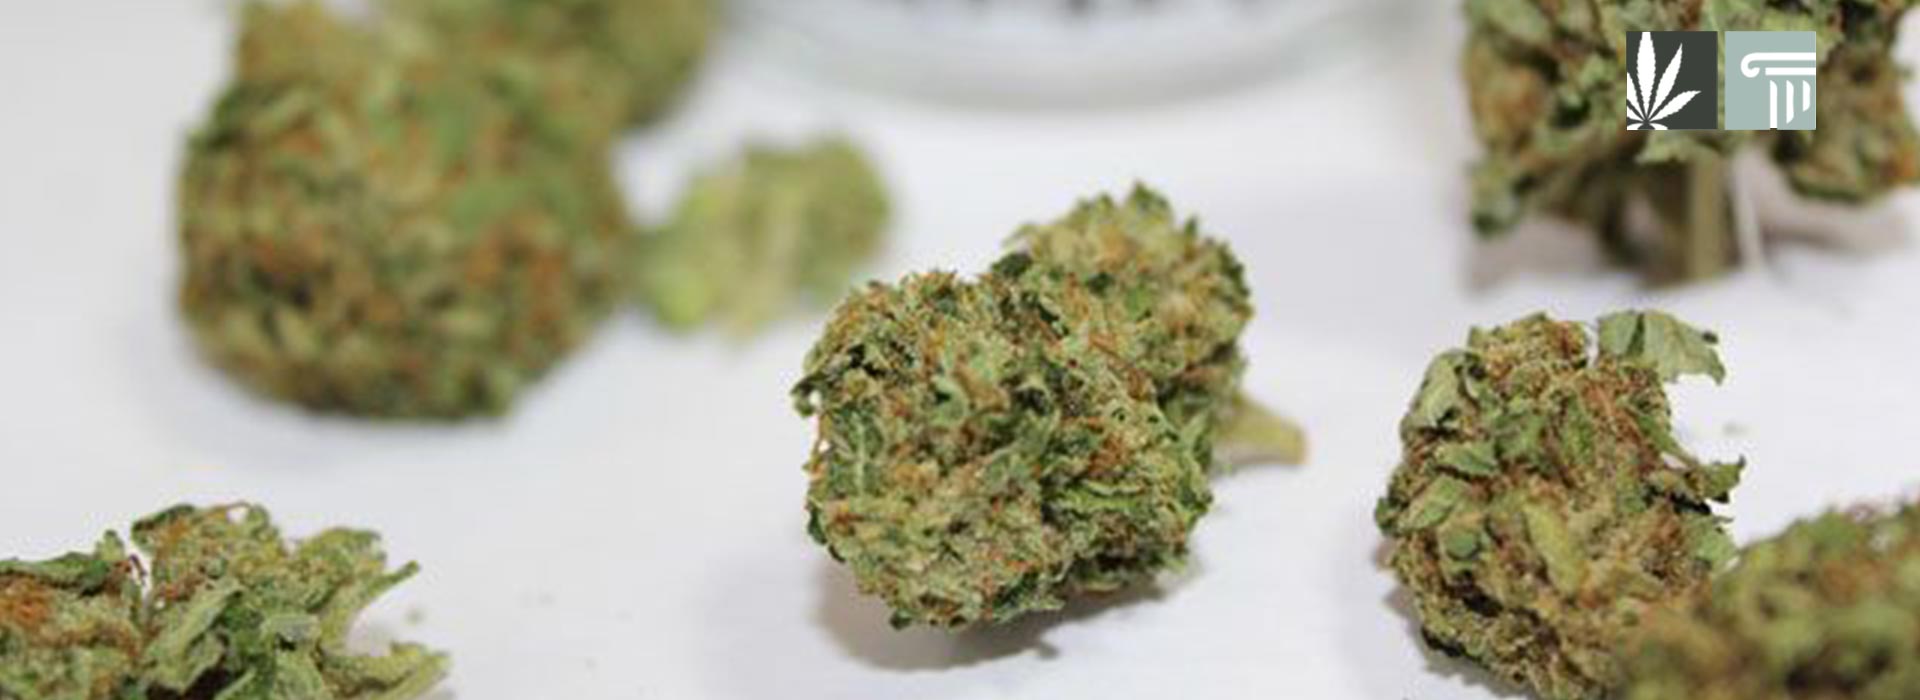 ohio marijuana decriminalization